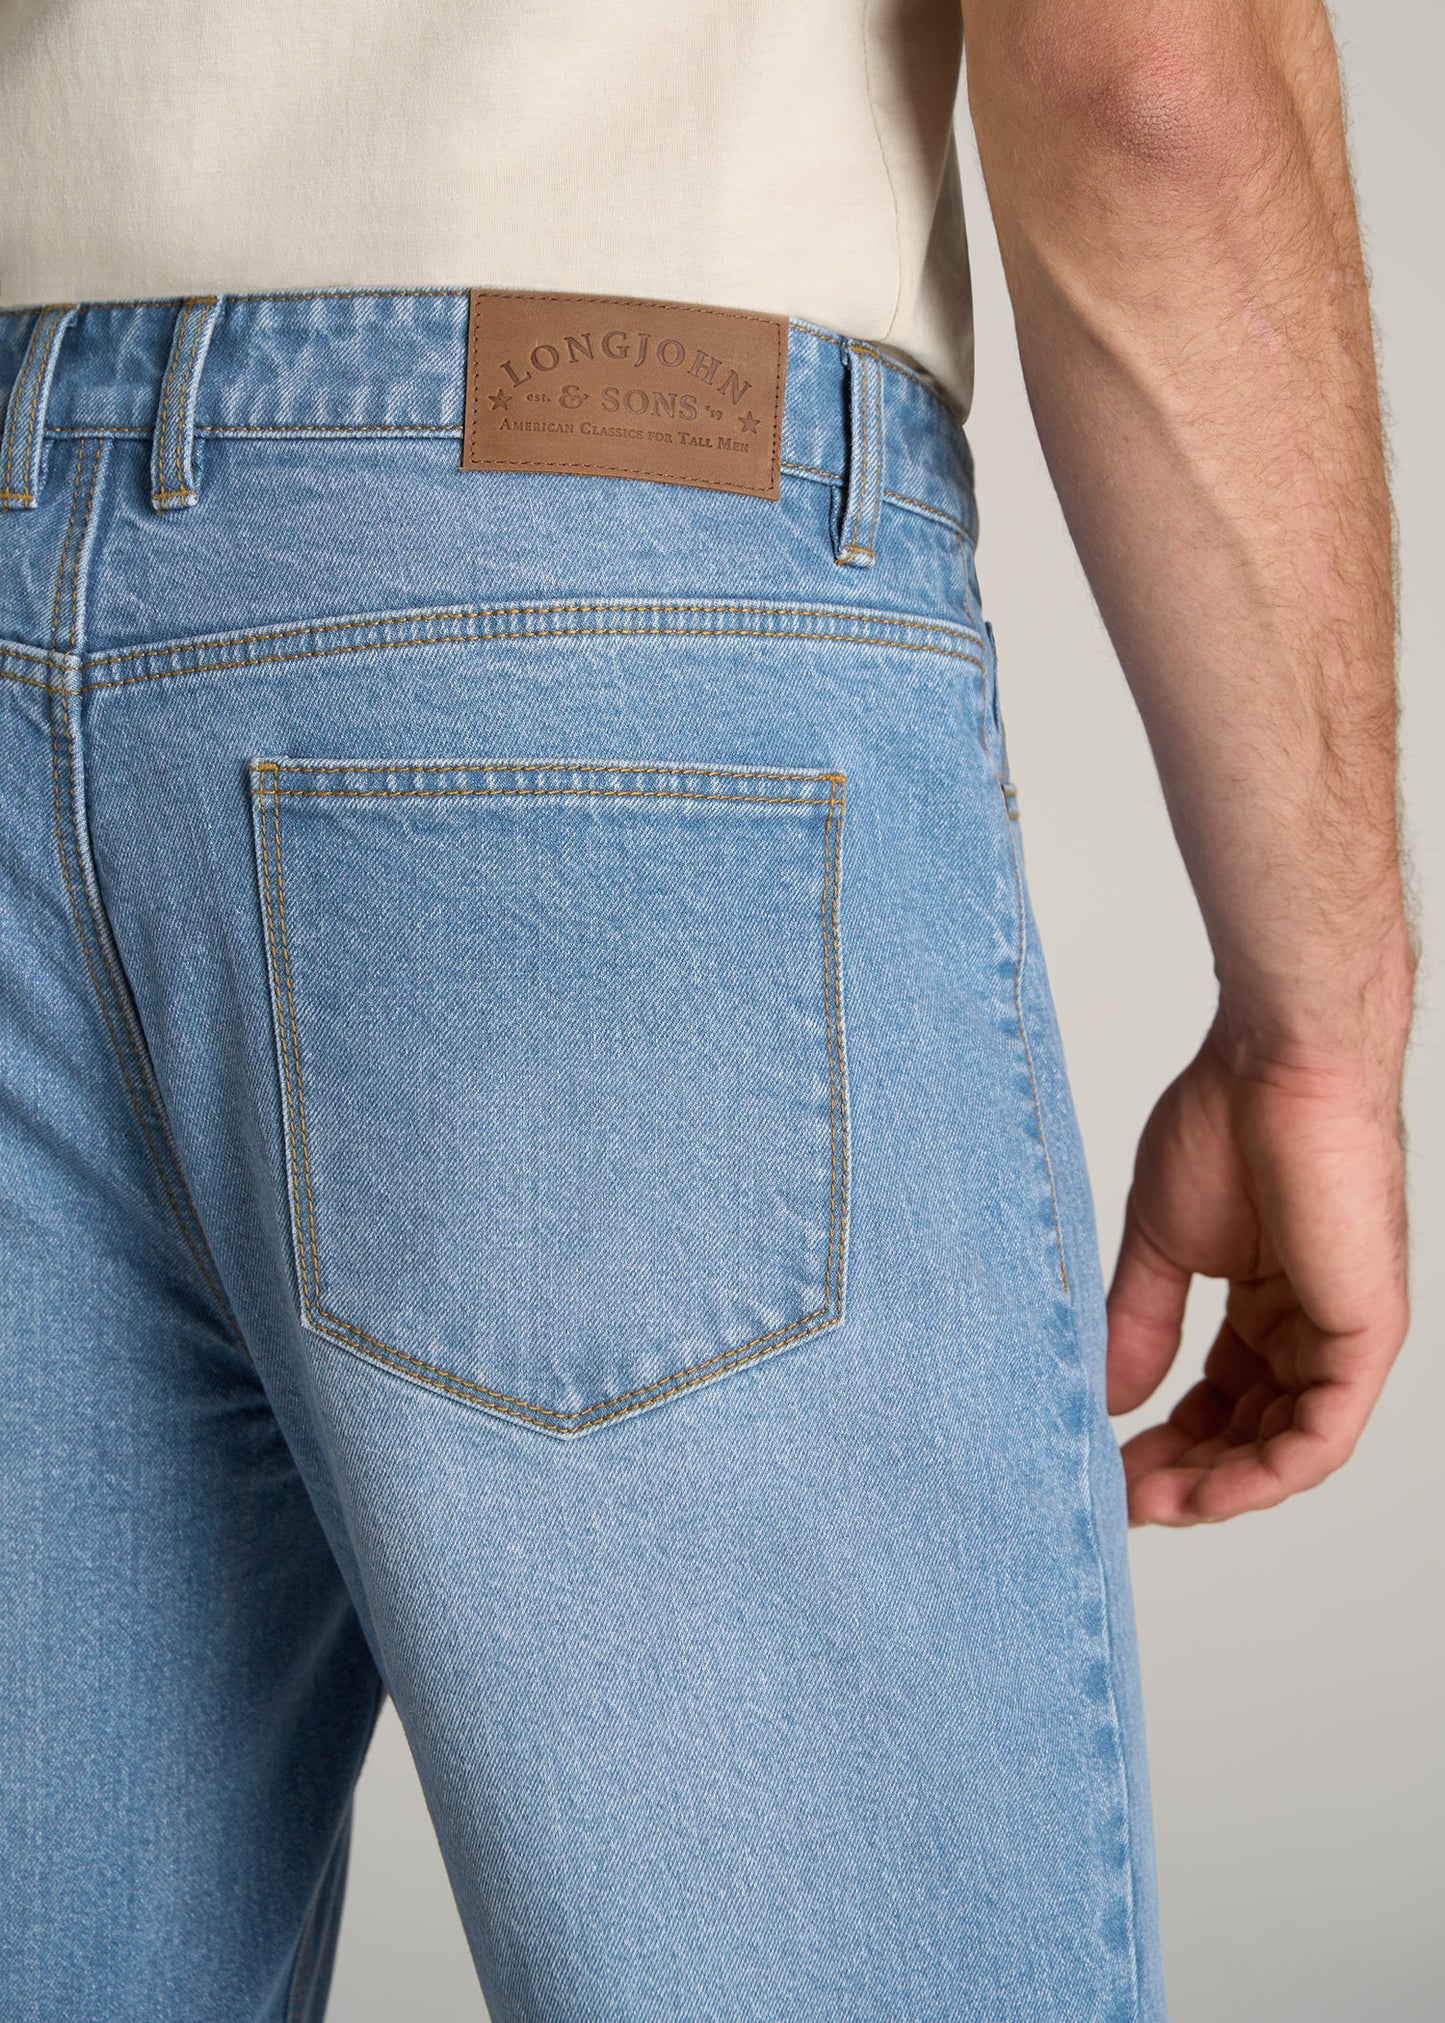       American-Tall-Men-LJ-Jeans-Straight-Leg-Stone-Wash-Light-Blue-detail